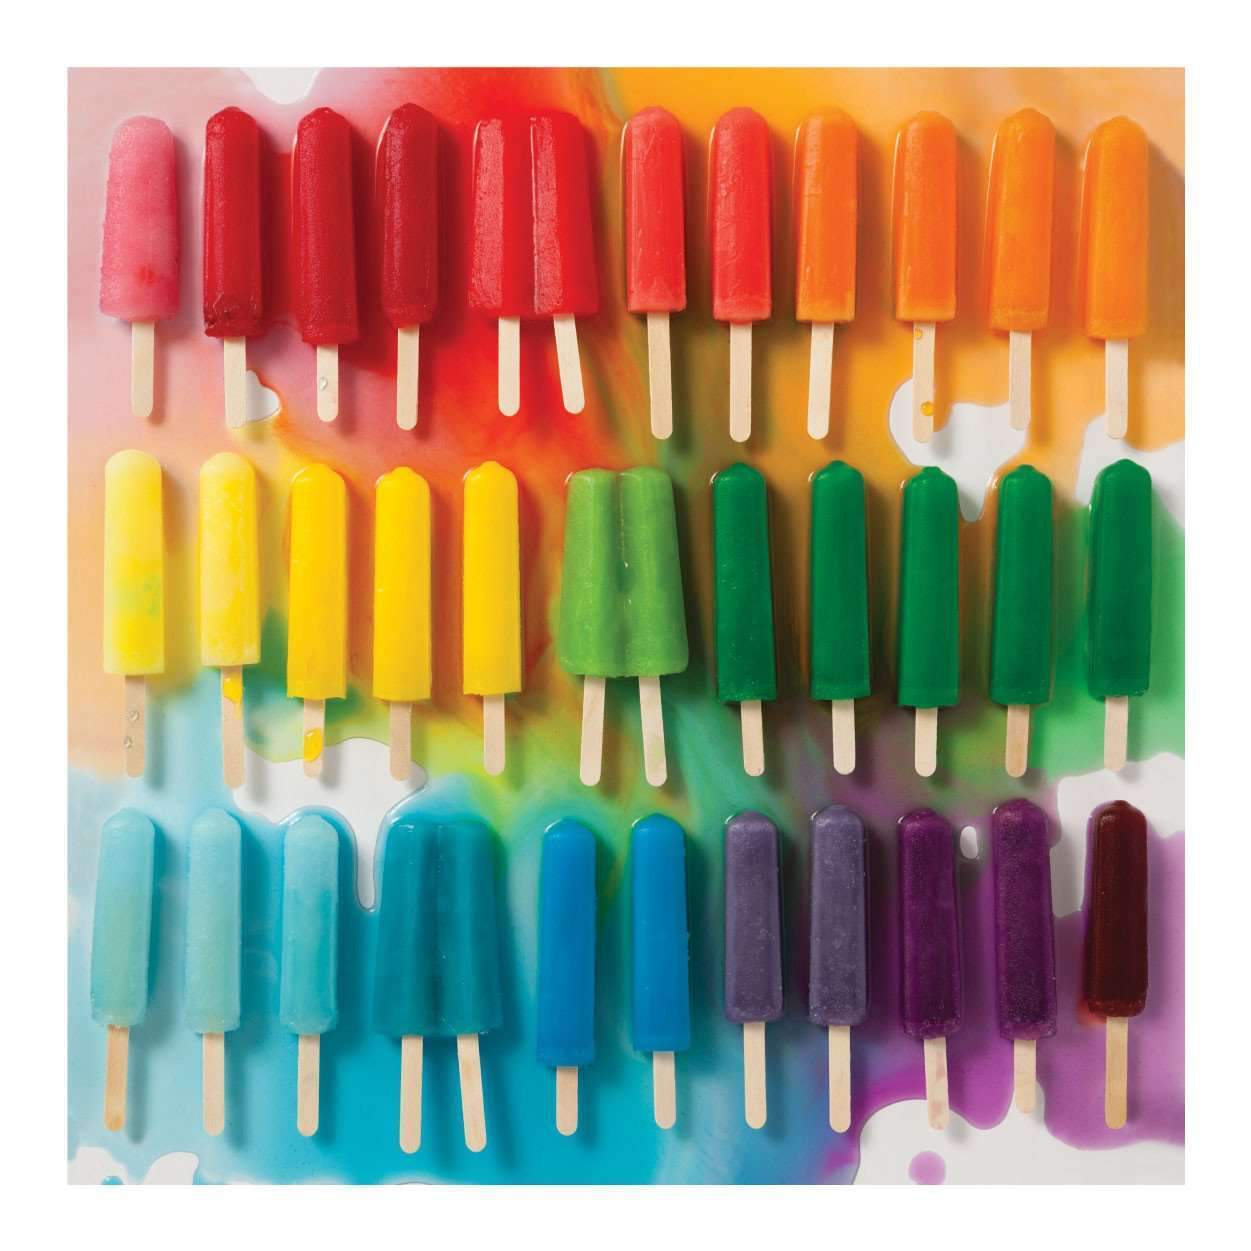 Galison | 500pc Puzzle - Rainbow Popsicles